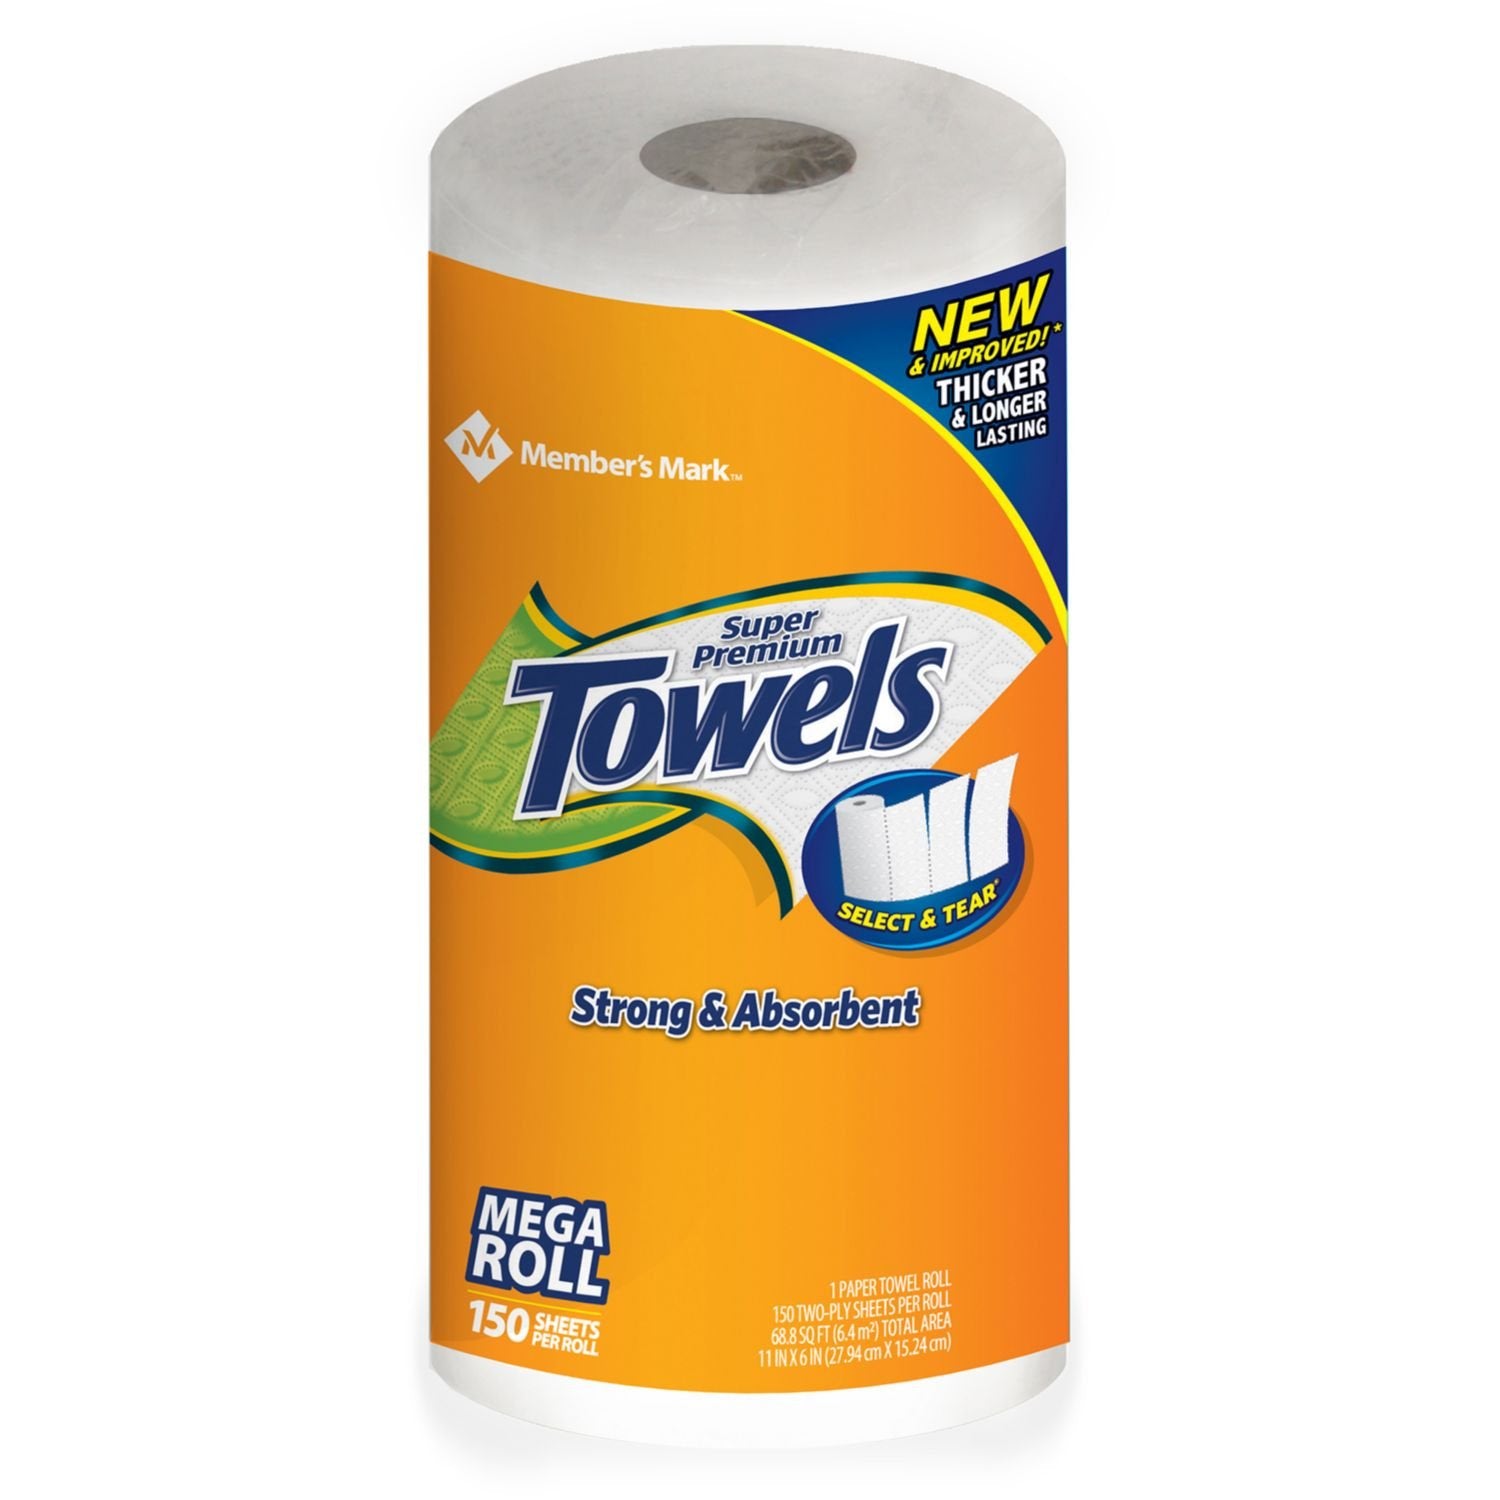 MEMBER'S MARK Paper Towels 150 sheets